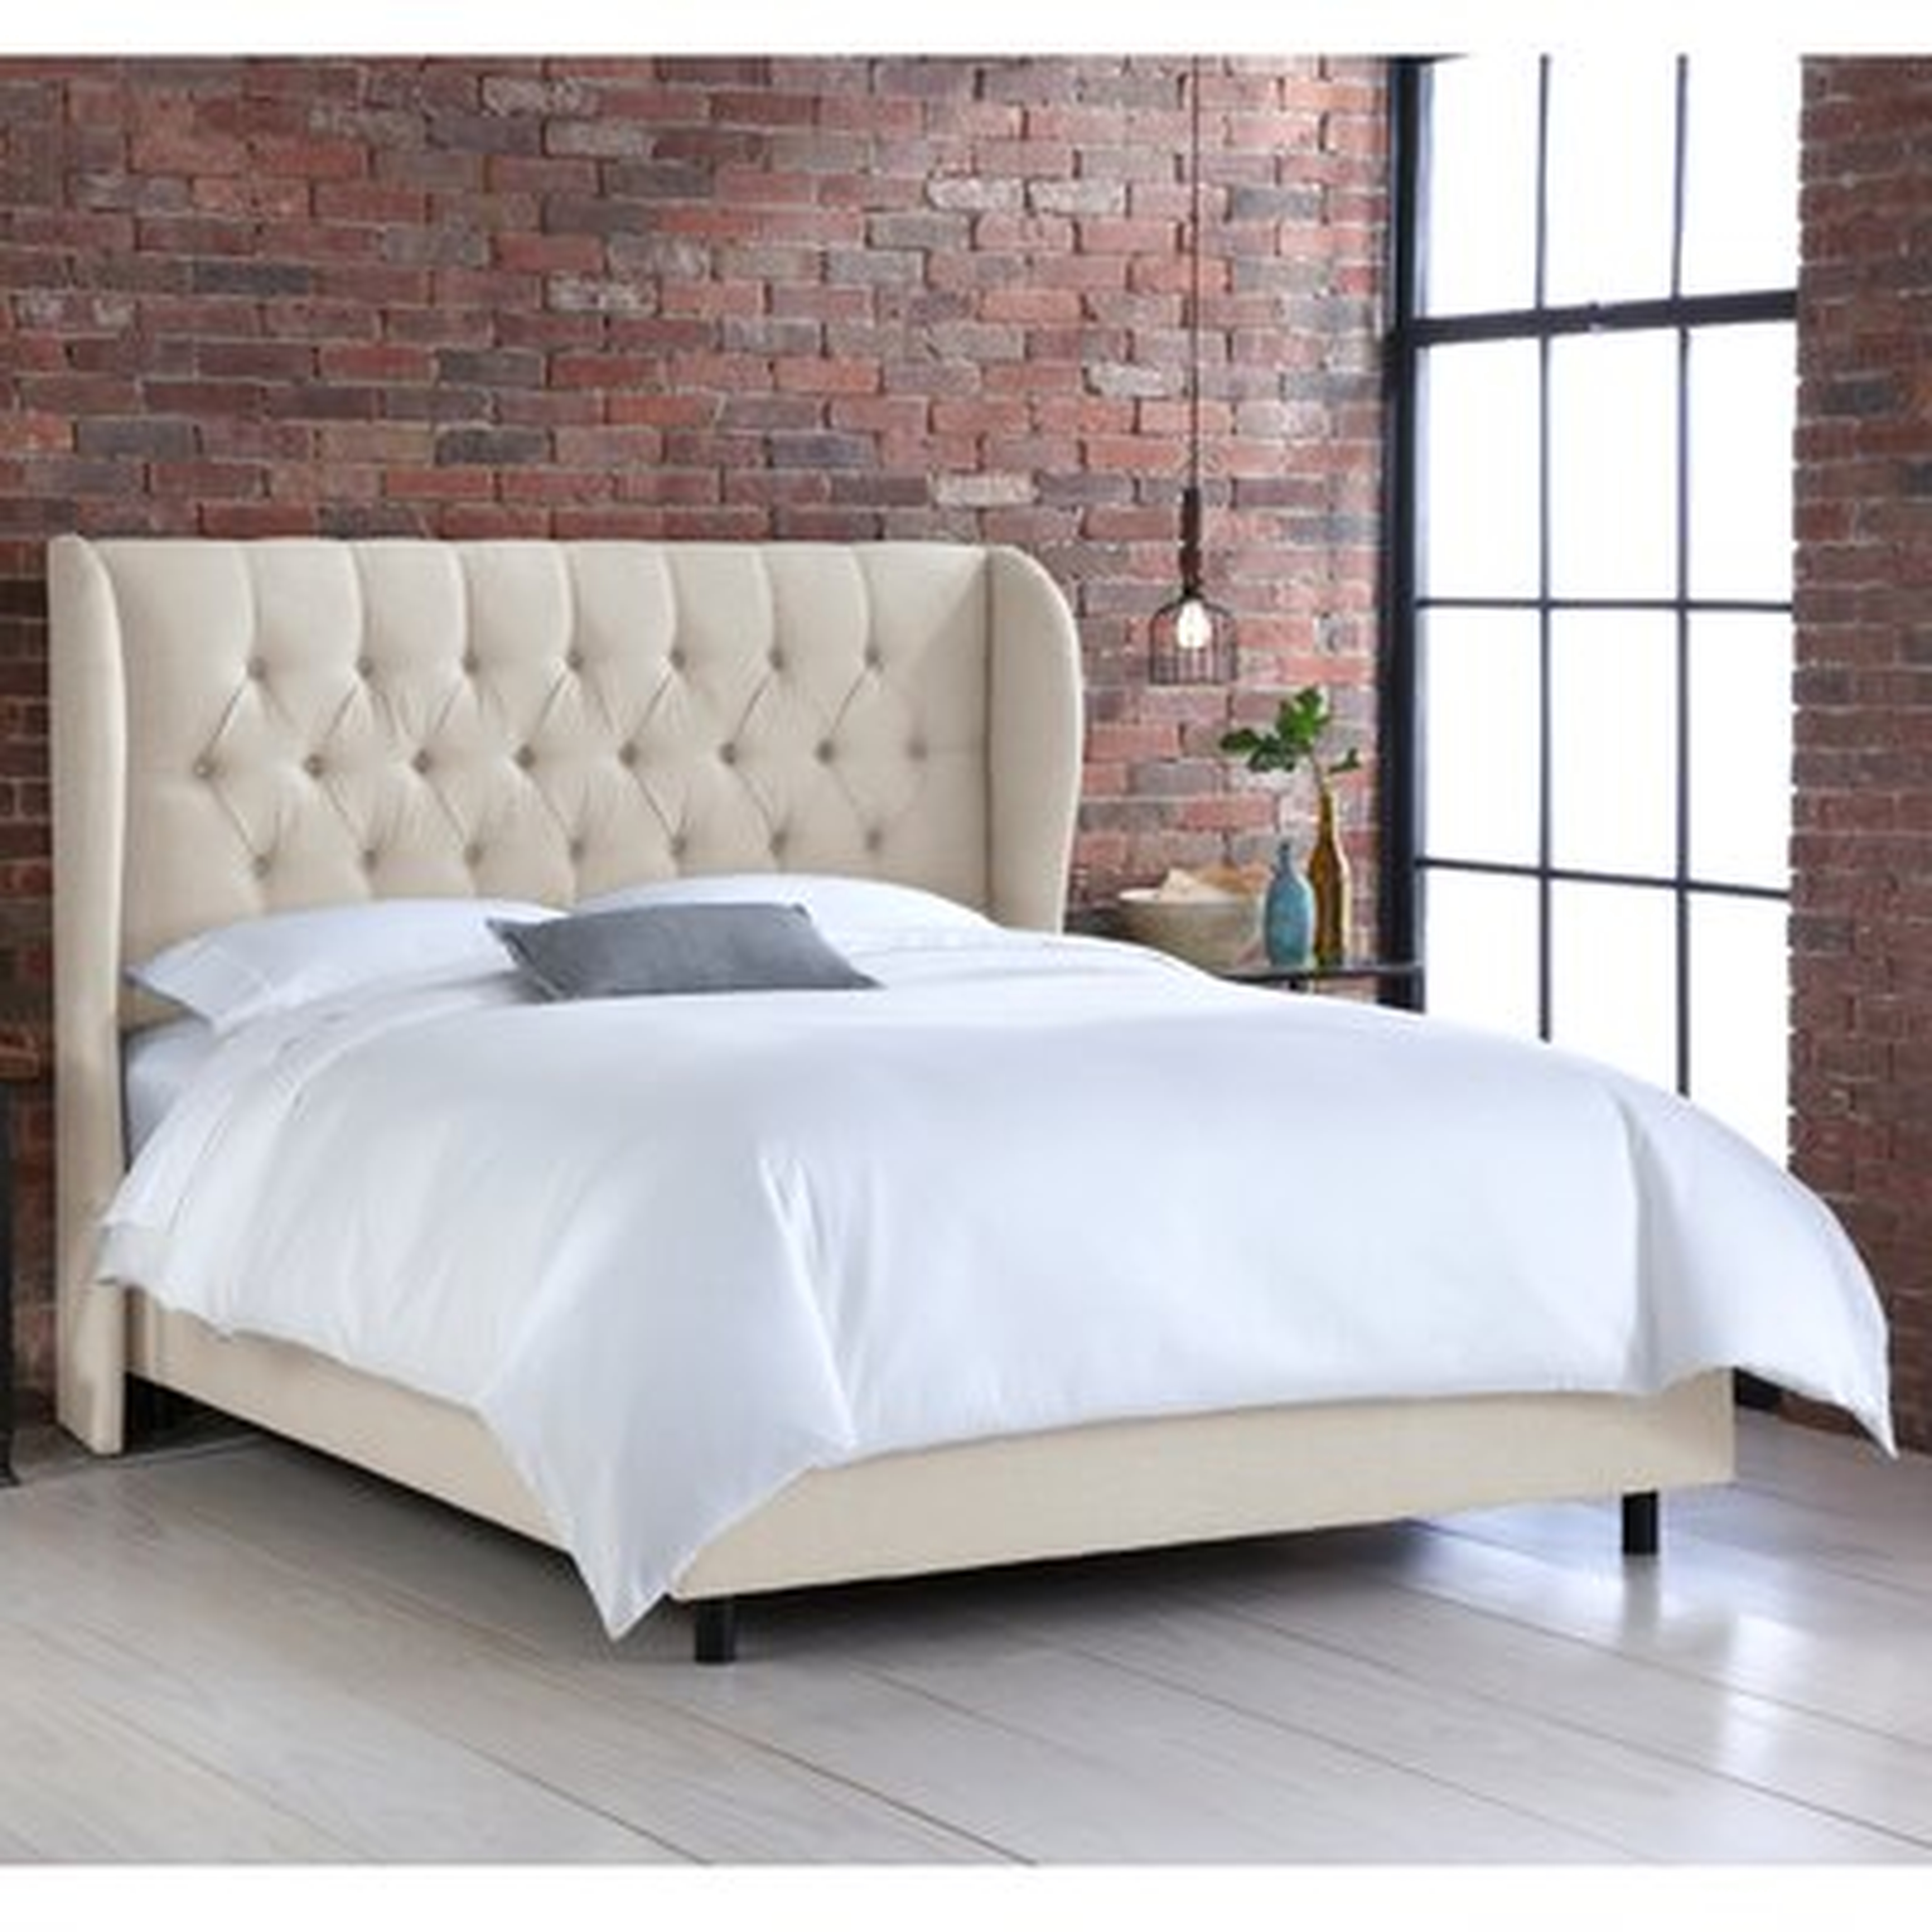 Ahumada Upholstered Low Profile Standard Bed - Wayfair